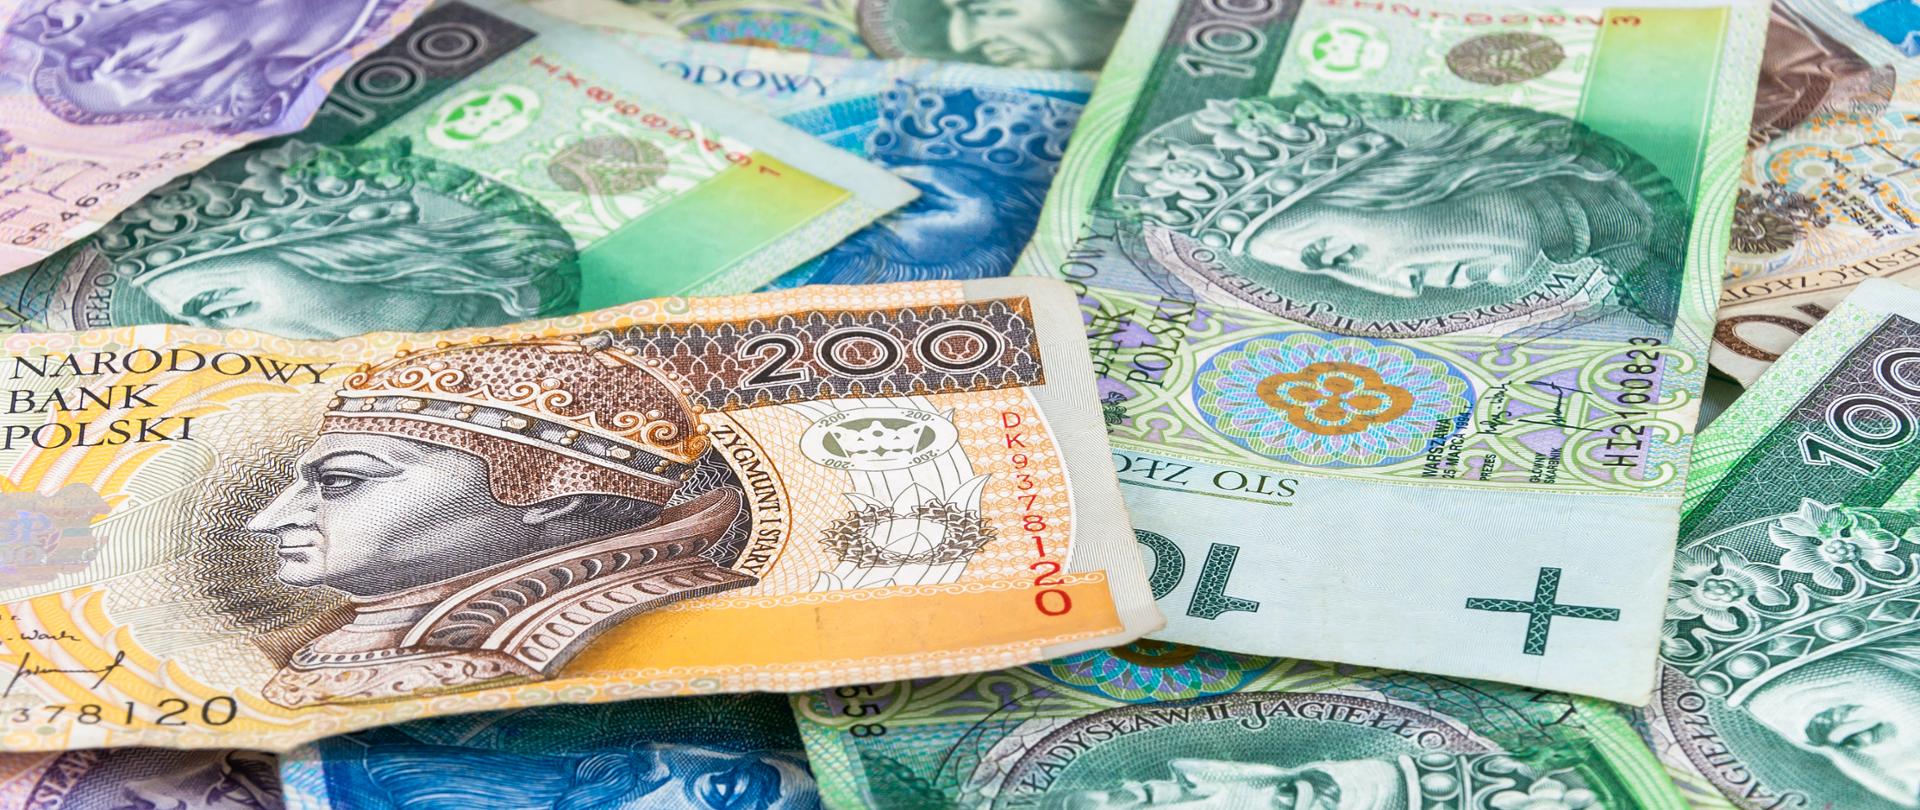 Background made of polish banknotes (polish zloty)